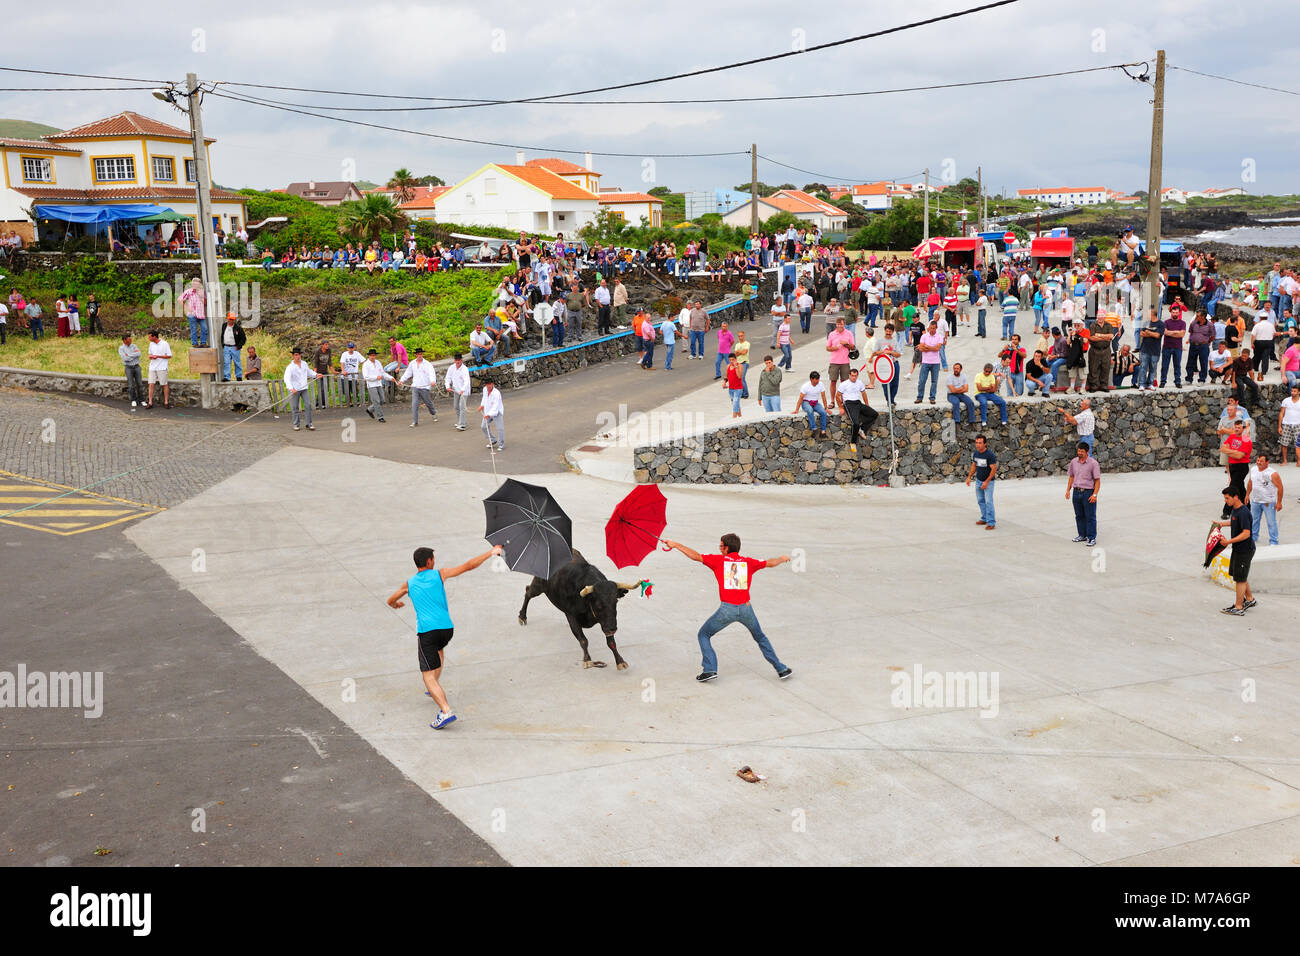 Bullfight (Tourada à Corda) in Porto Martins. Terceira island, Azores. Portugal Stock Photo